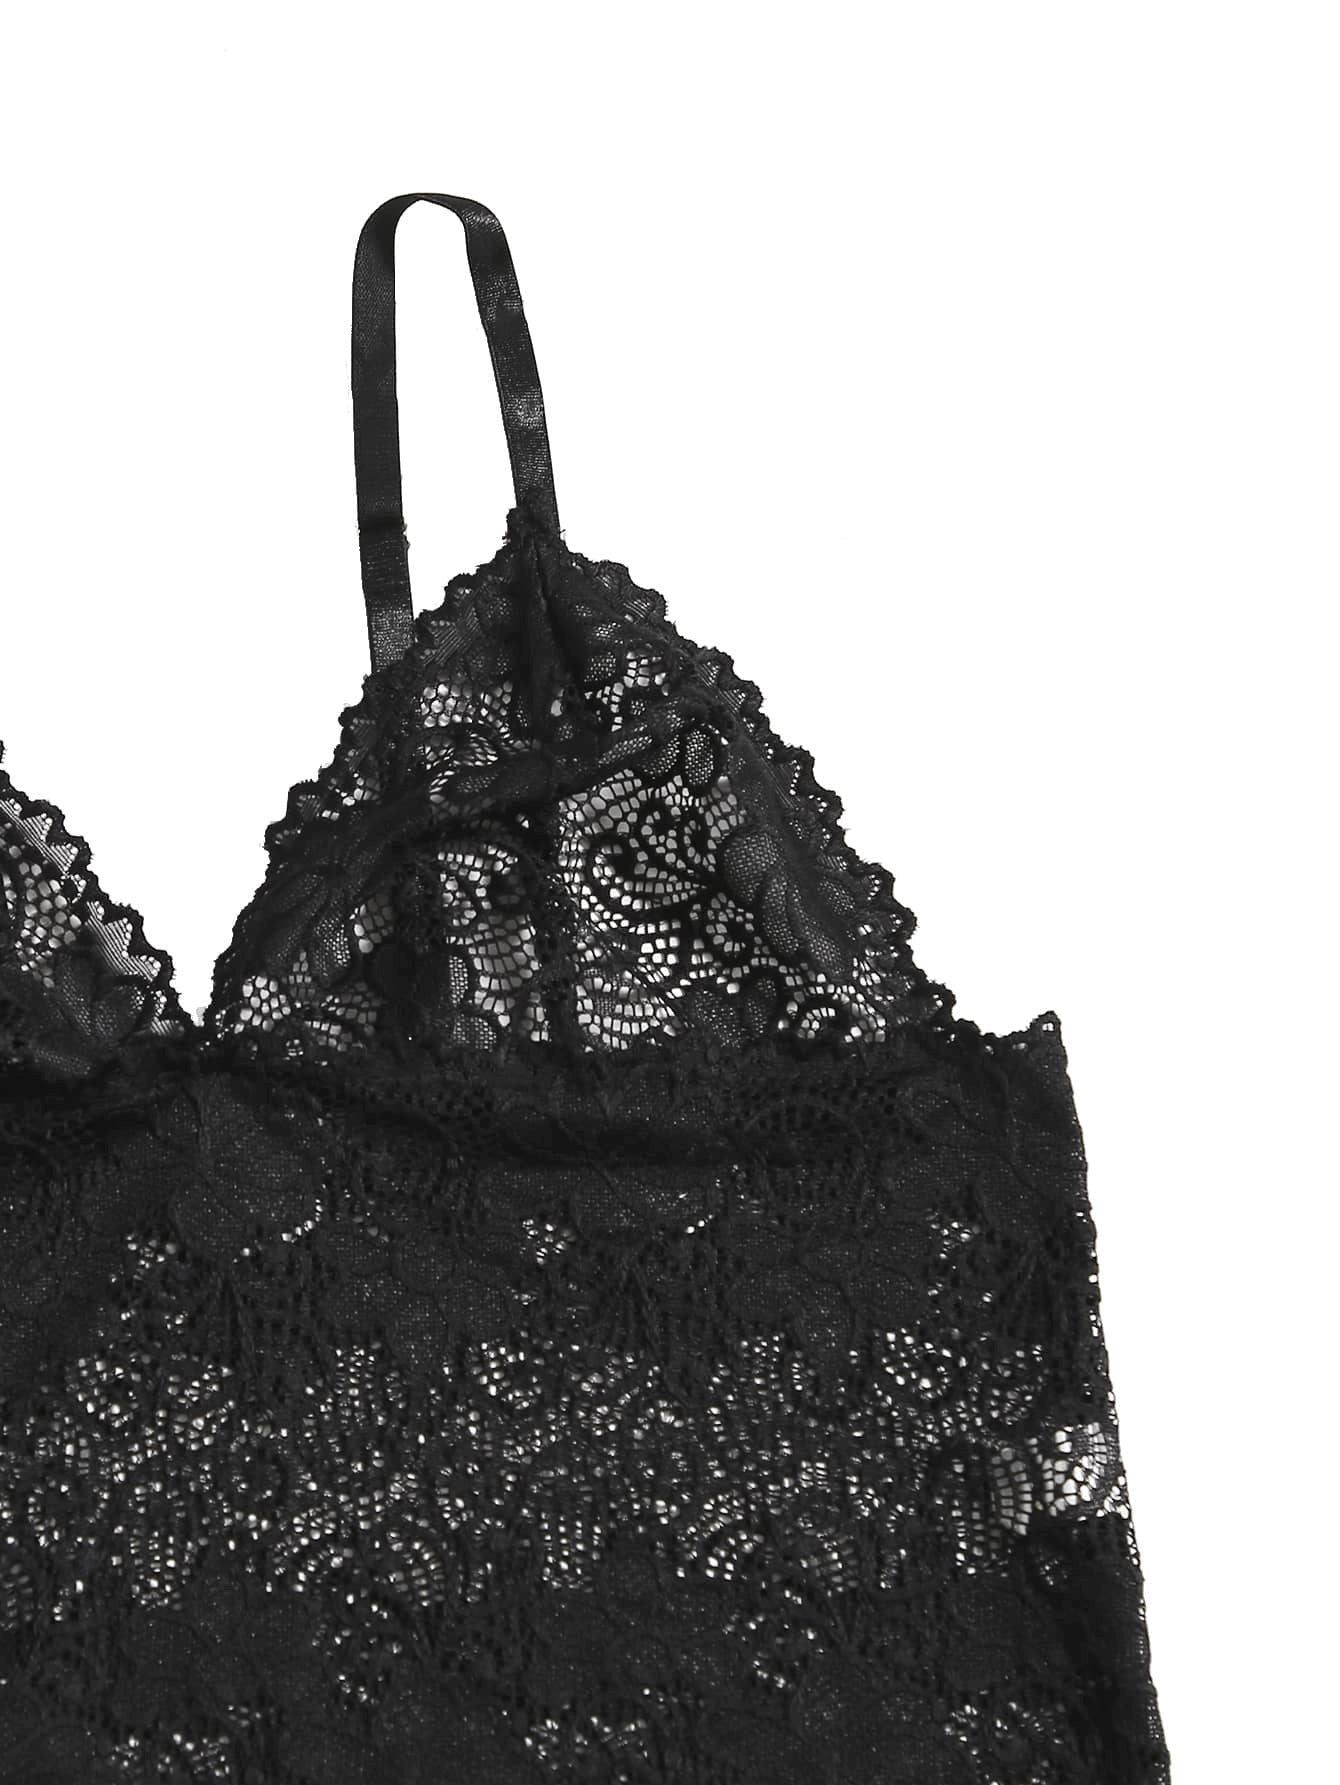 Floral Printed Black Lace Nightgown Bathrobe Lingerie Four-Piece Set